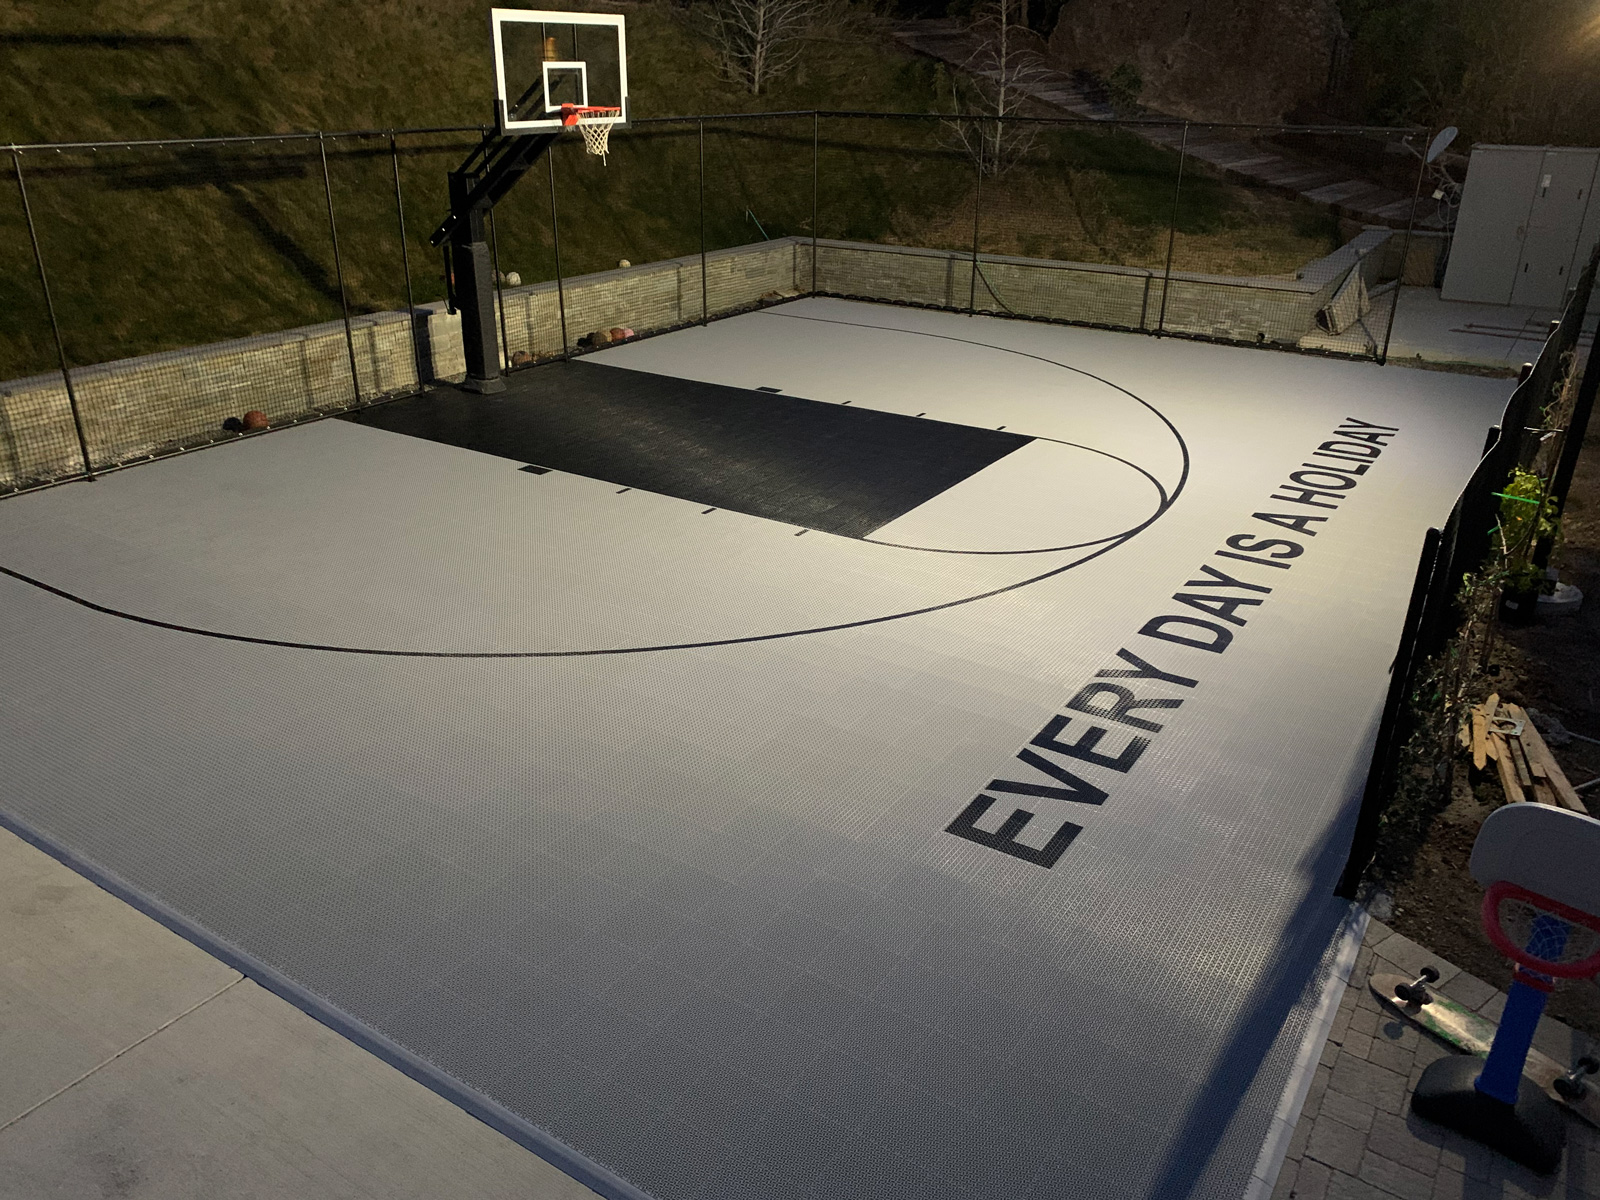 Backyard basketball half-court with custom painting